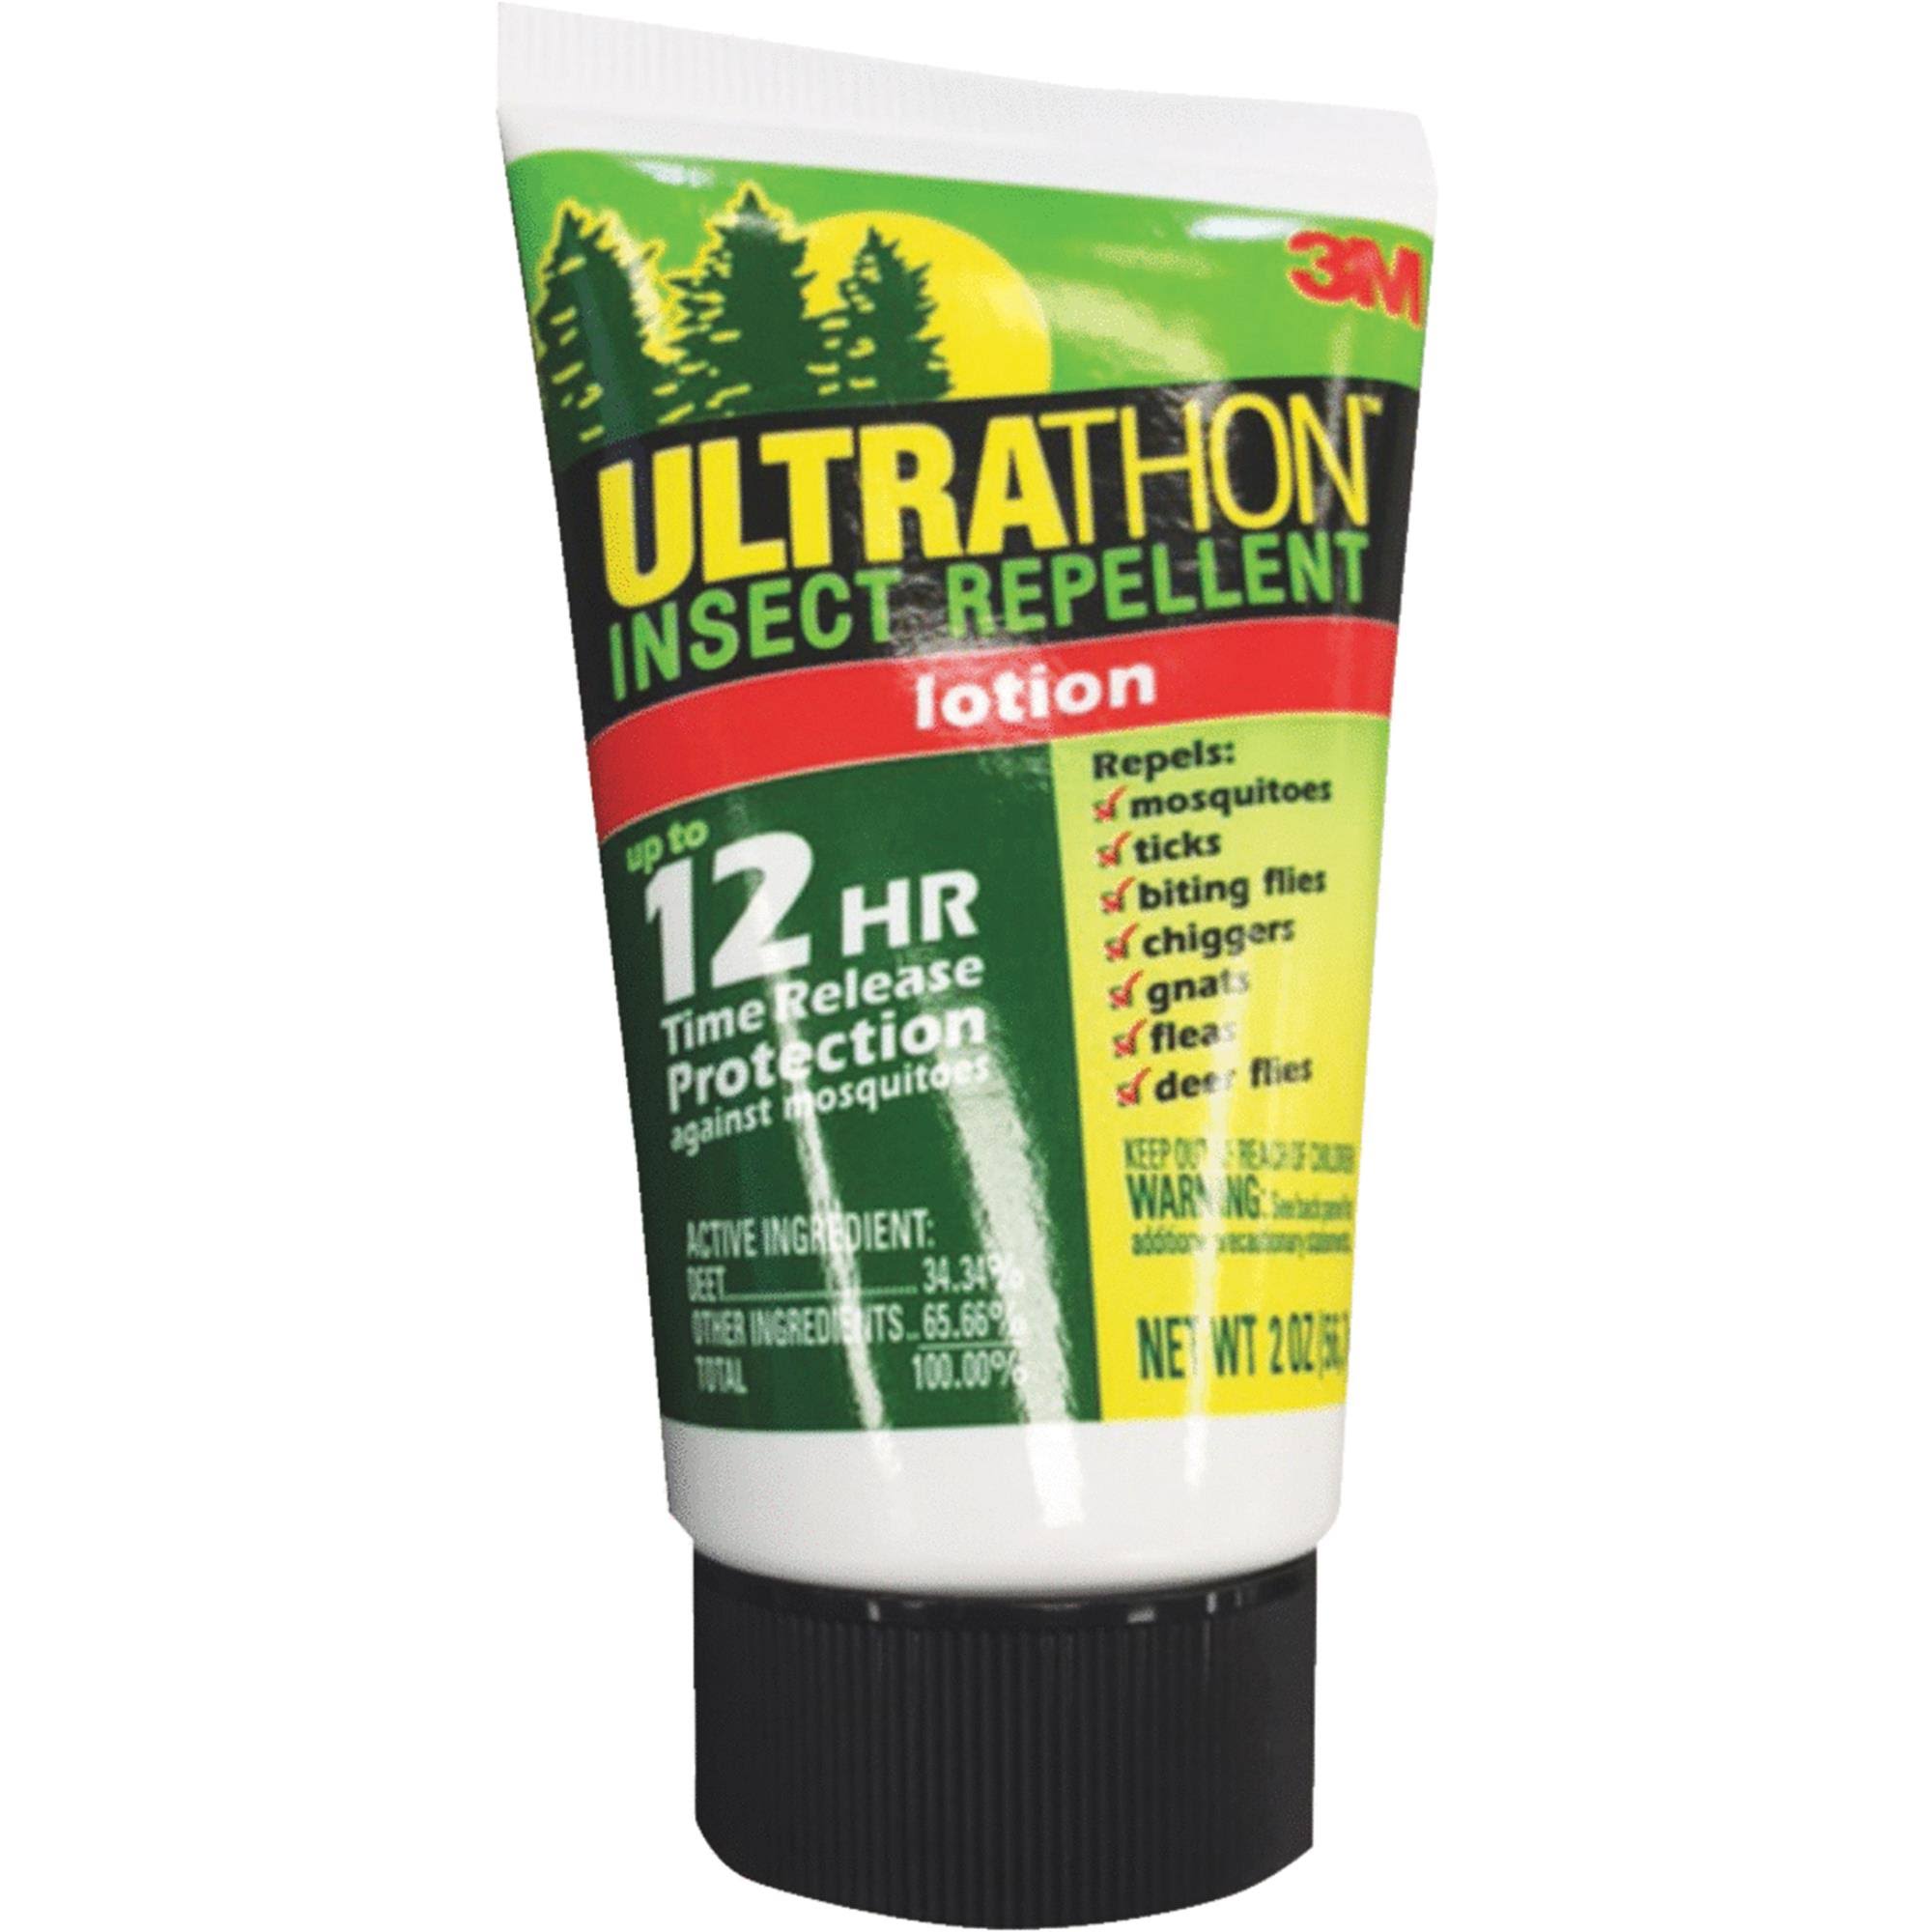 3M Ultrathon Insect Repellent Lotion - 2oz